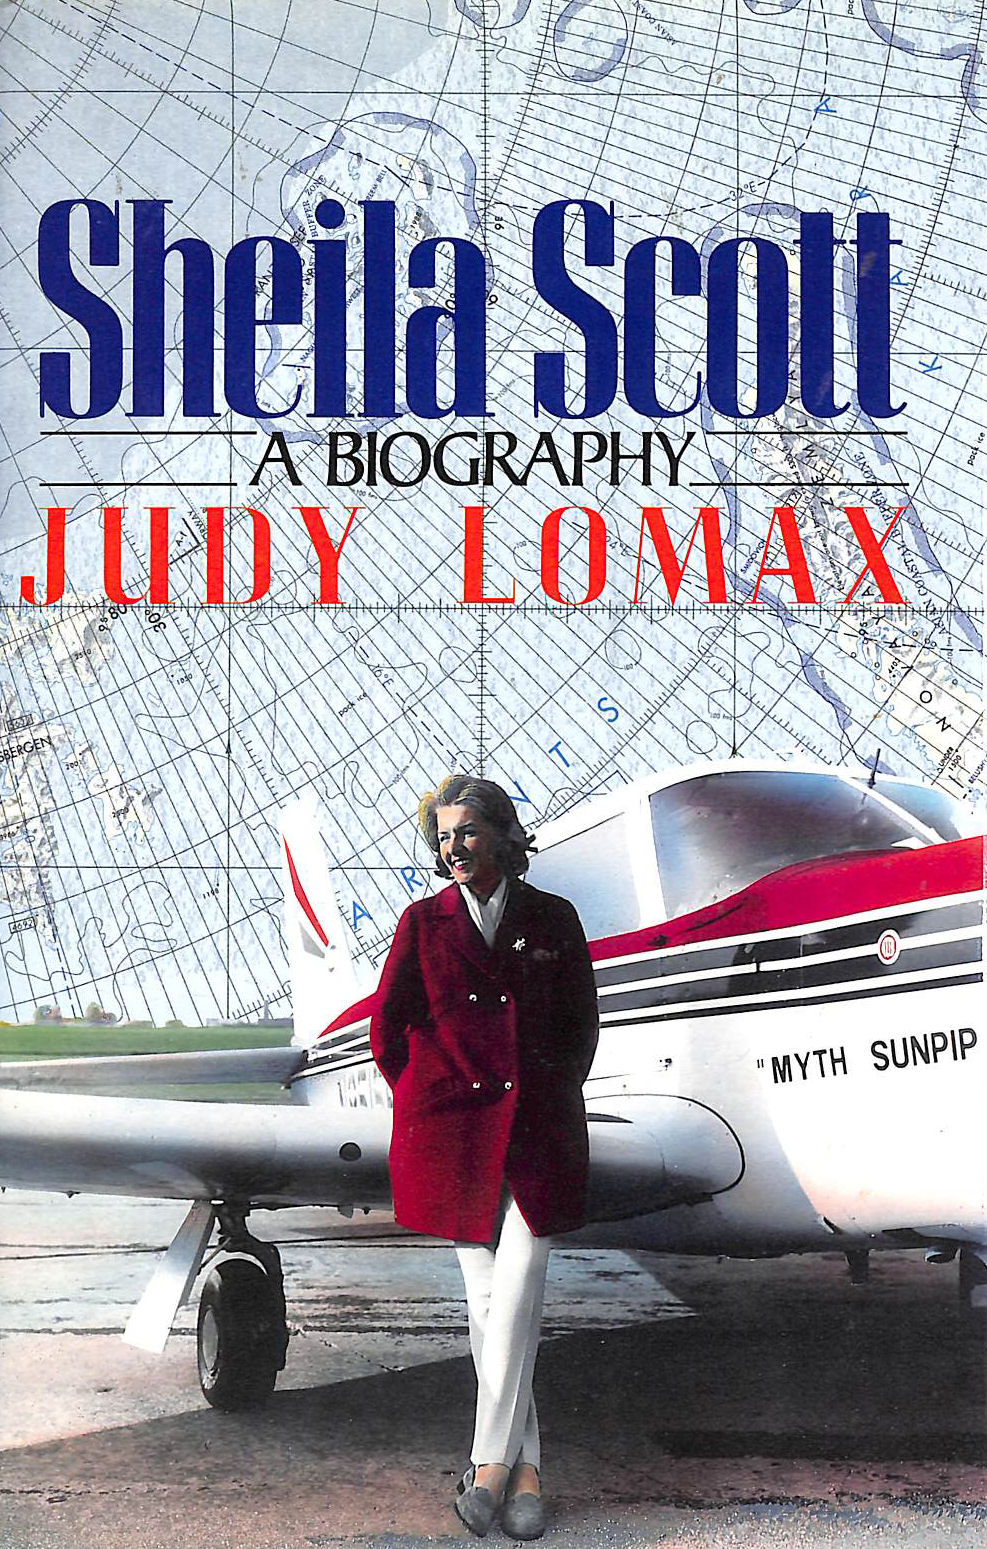 LOMAX, JUDY - Sheila Scott: Biography